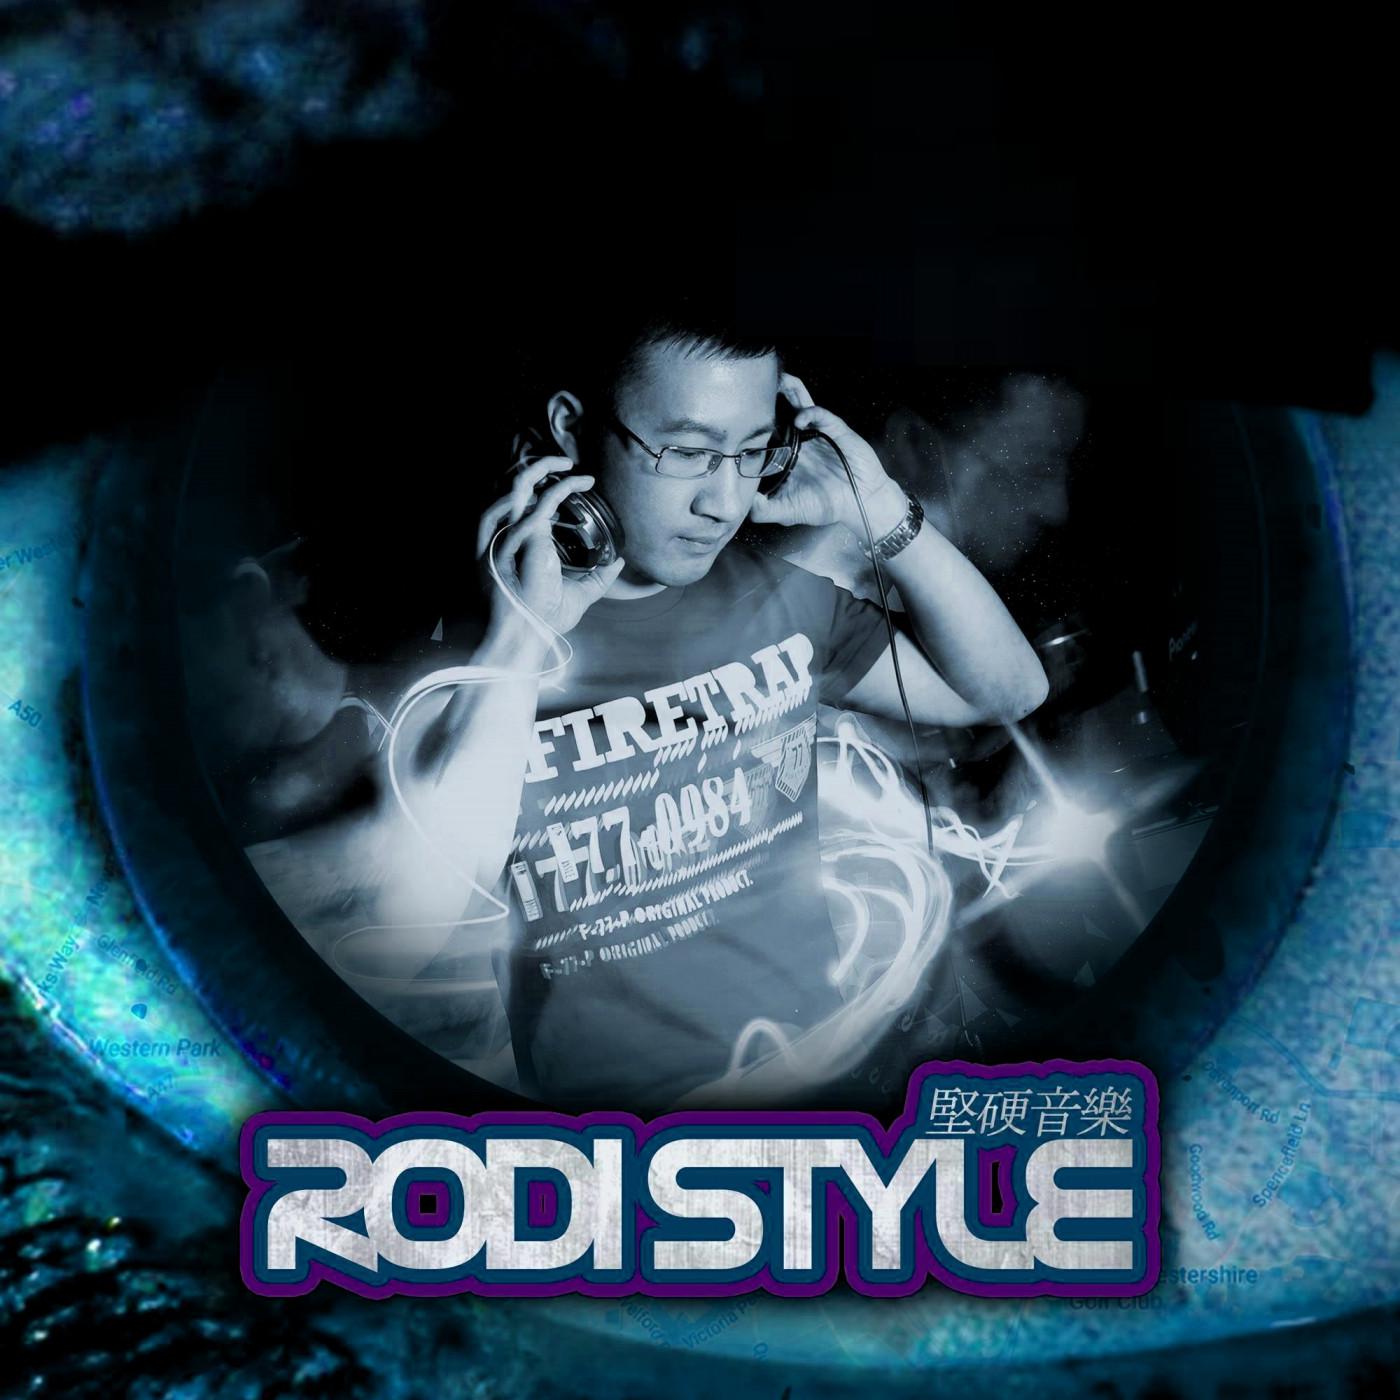 Rodi Style - Wide Awake (feat. Bryan Doyle) (Radio Edit)